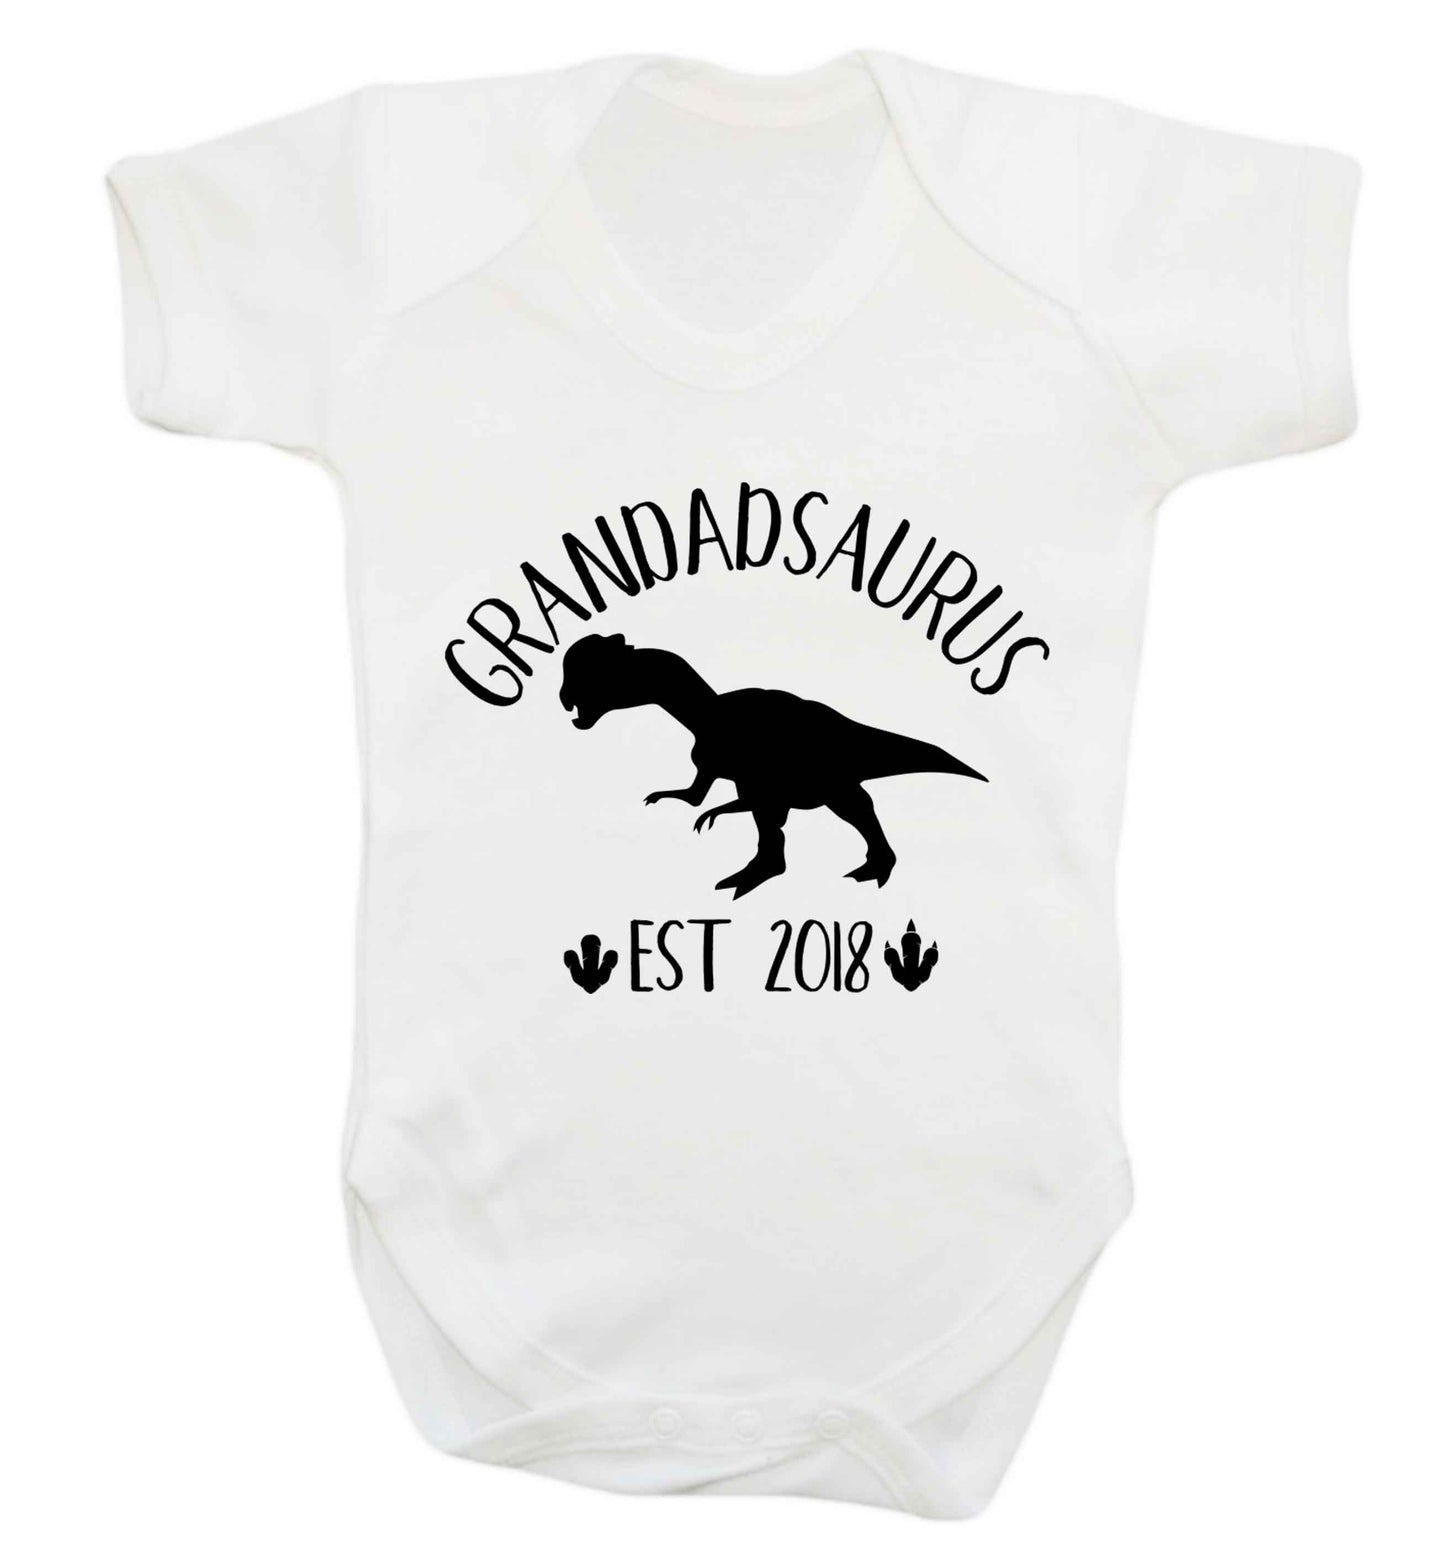 Personalised grandadsaurus since (custom date) Baby Vest white 18-24 months